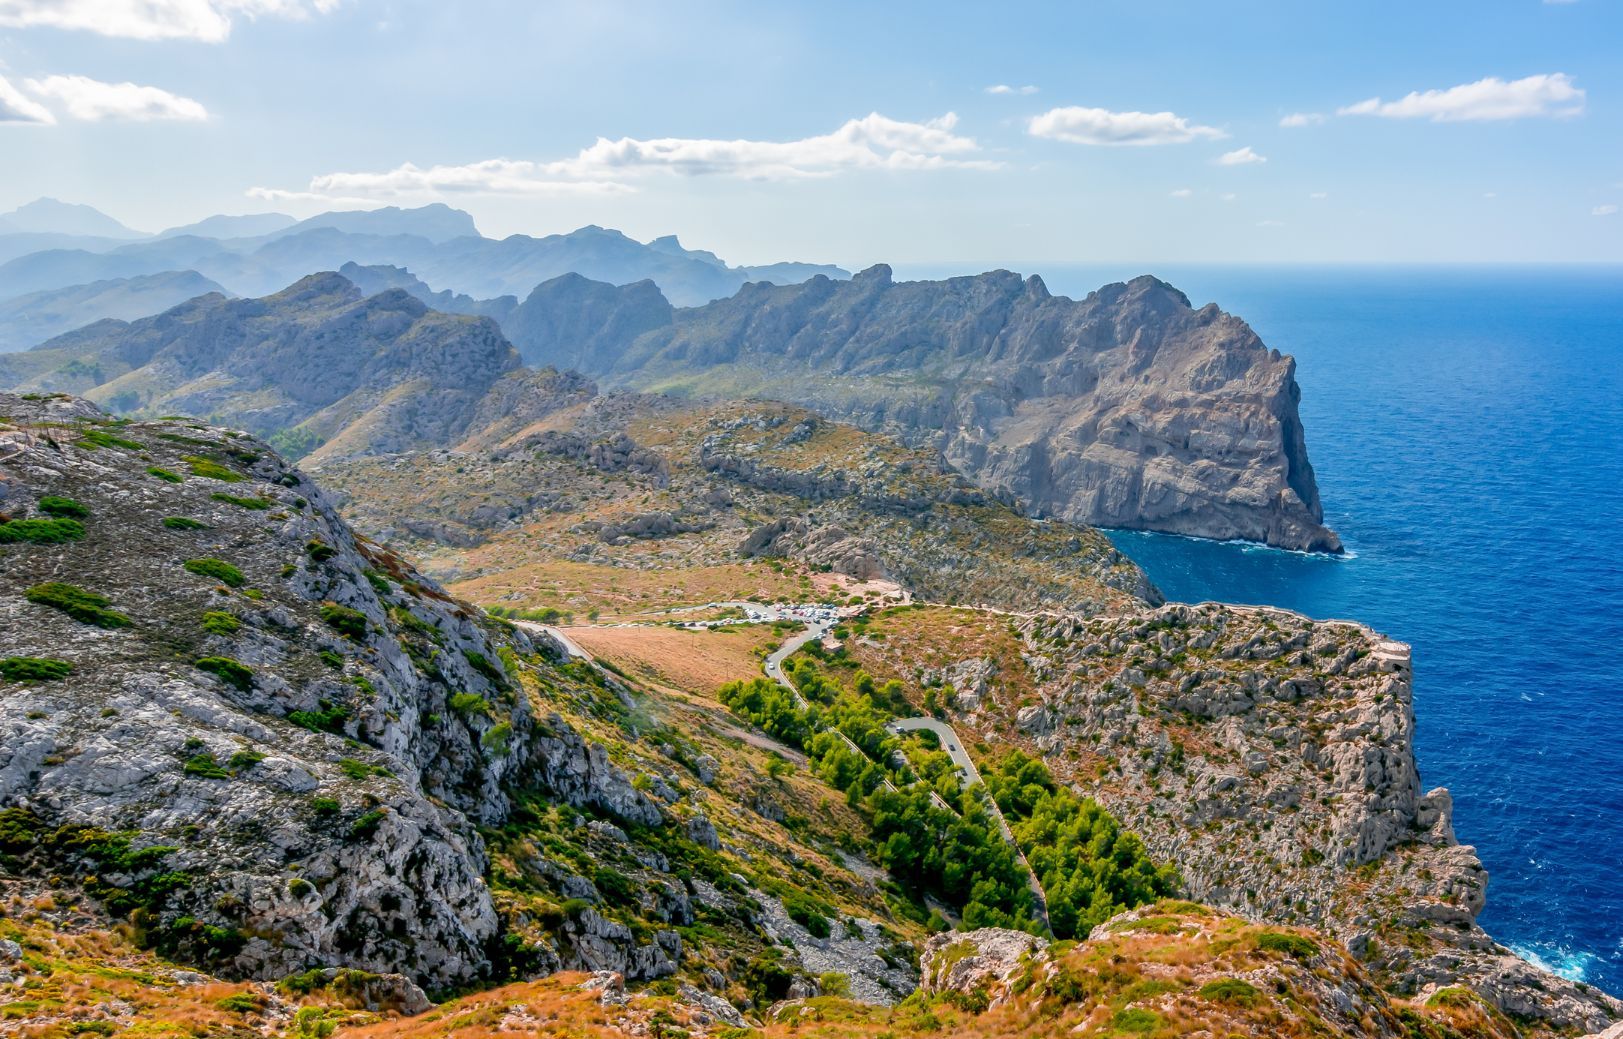 Tramuntana mountains (Serra de Tramuntana), as seen from Formentor cape in the west of Mallorca. Photo: Getty